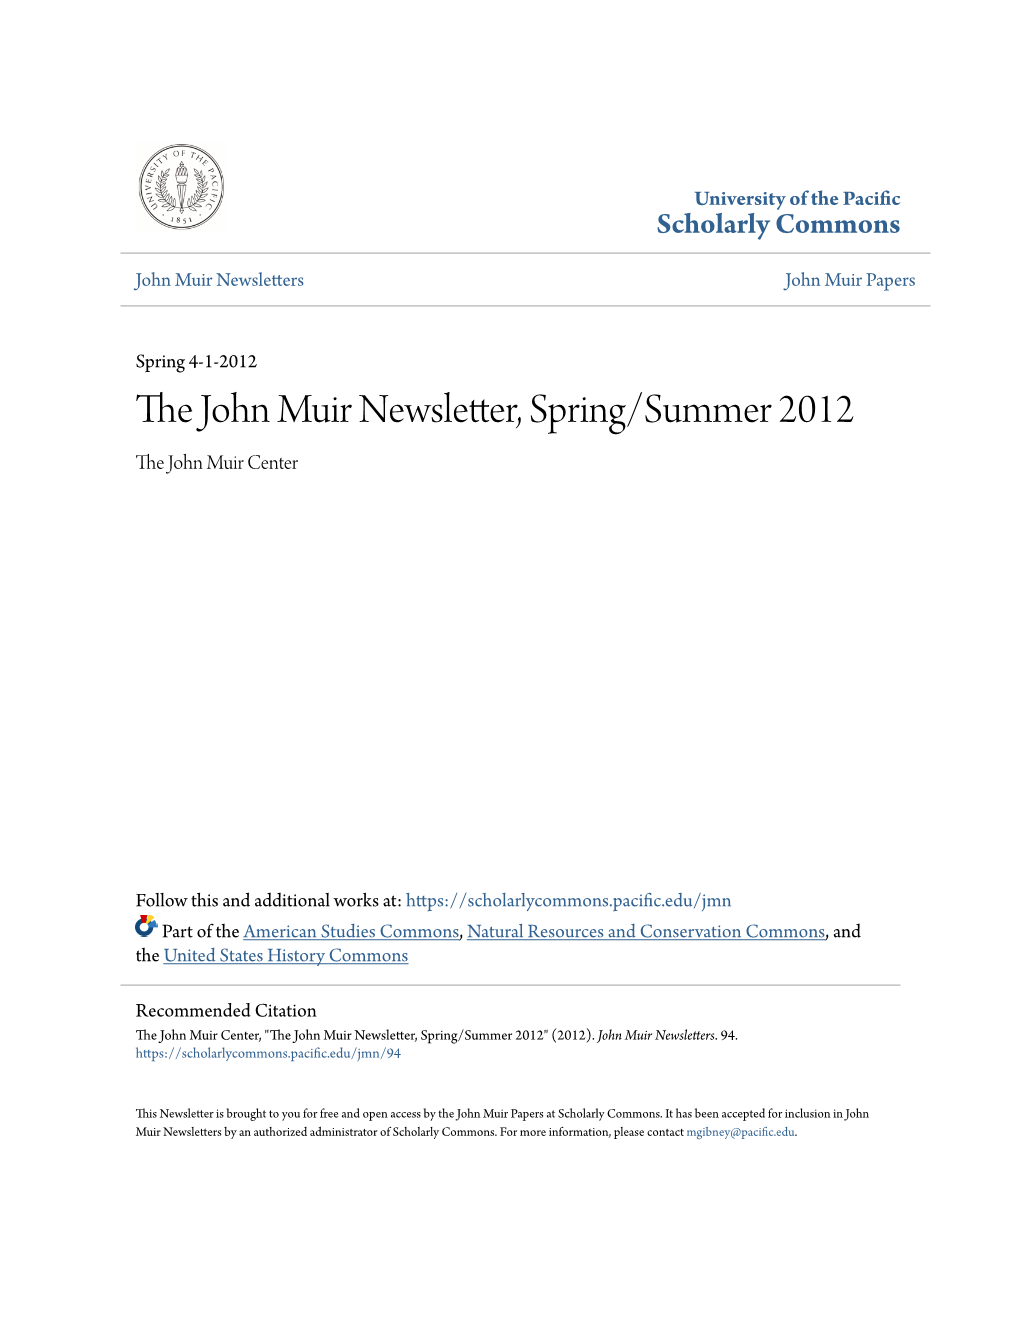 The John Muir Newsletter, Spring/Summer 2012